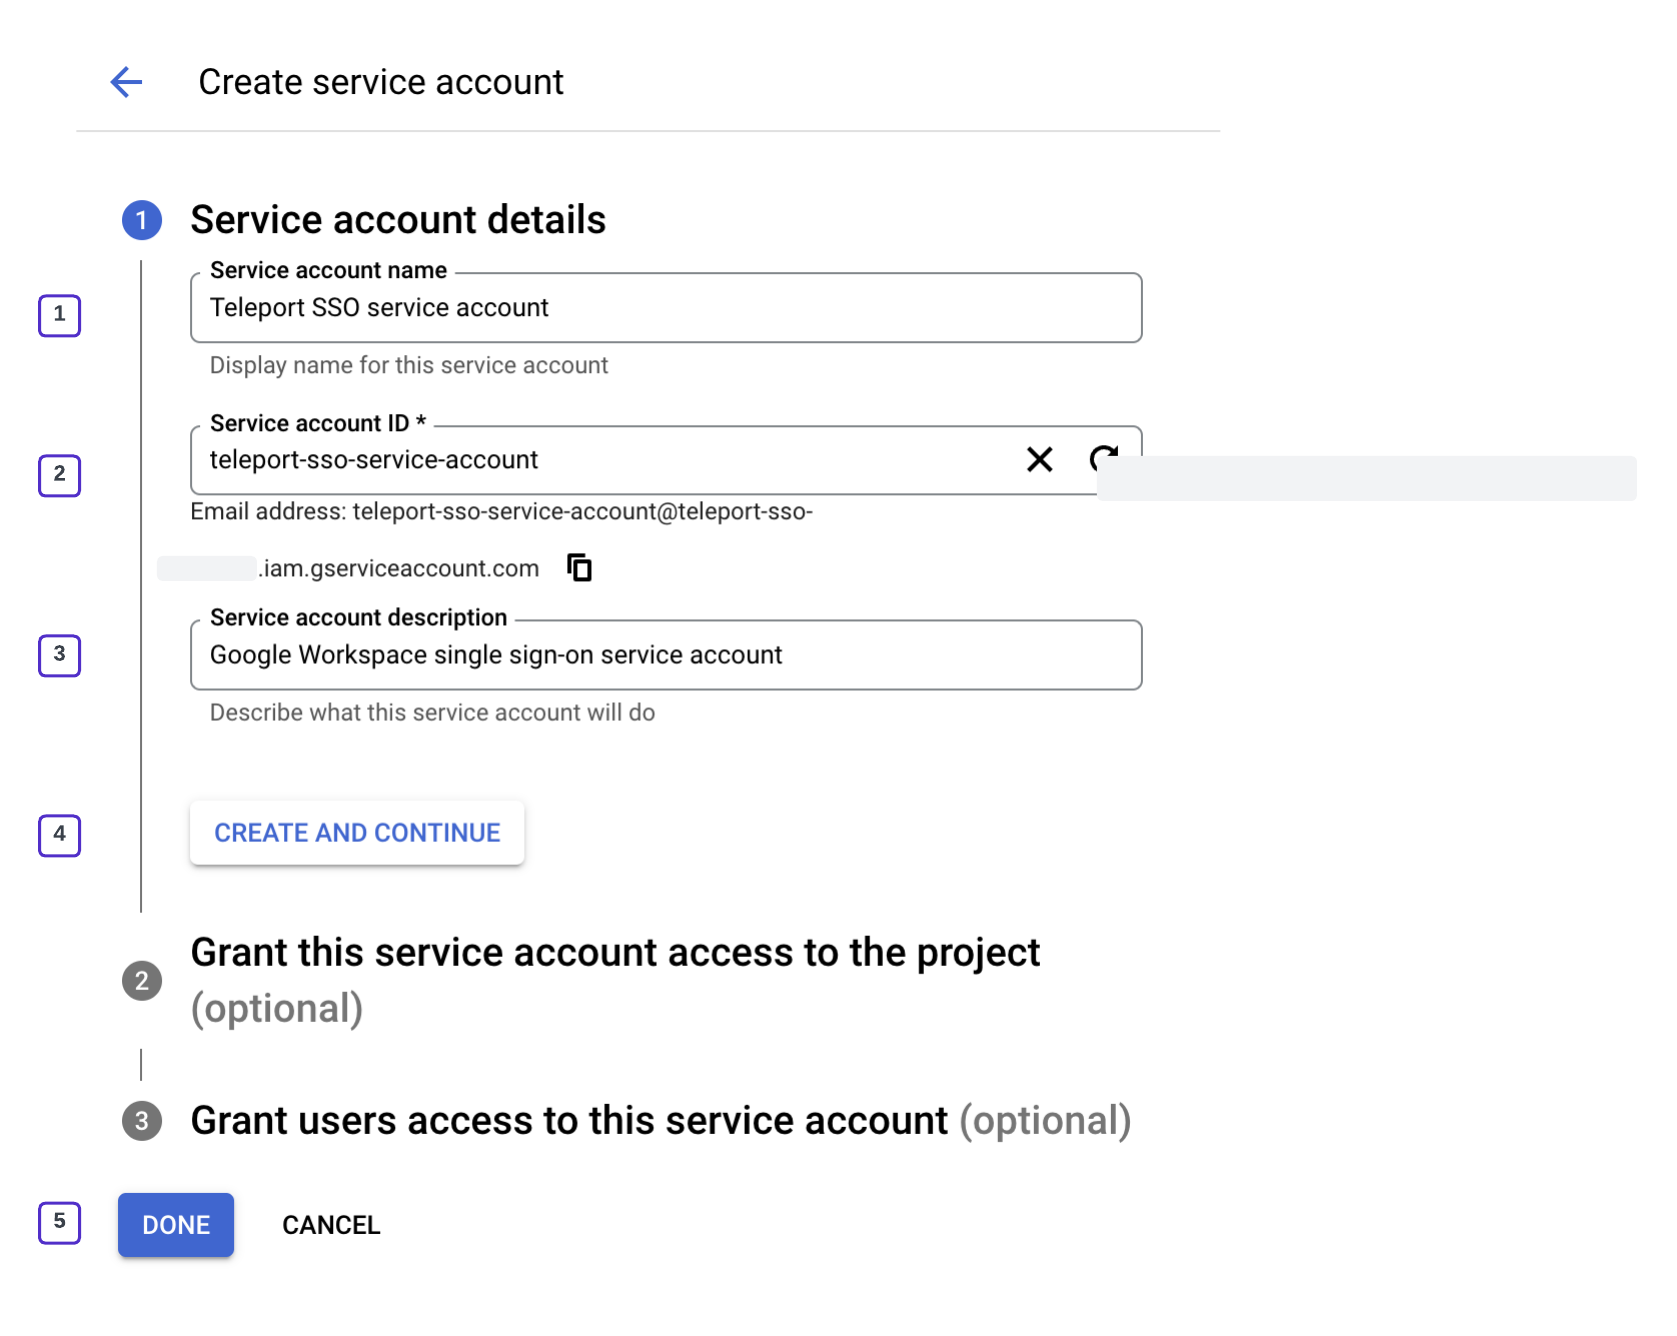 Create the service account